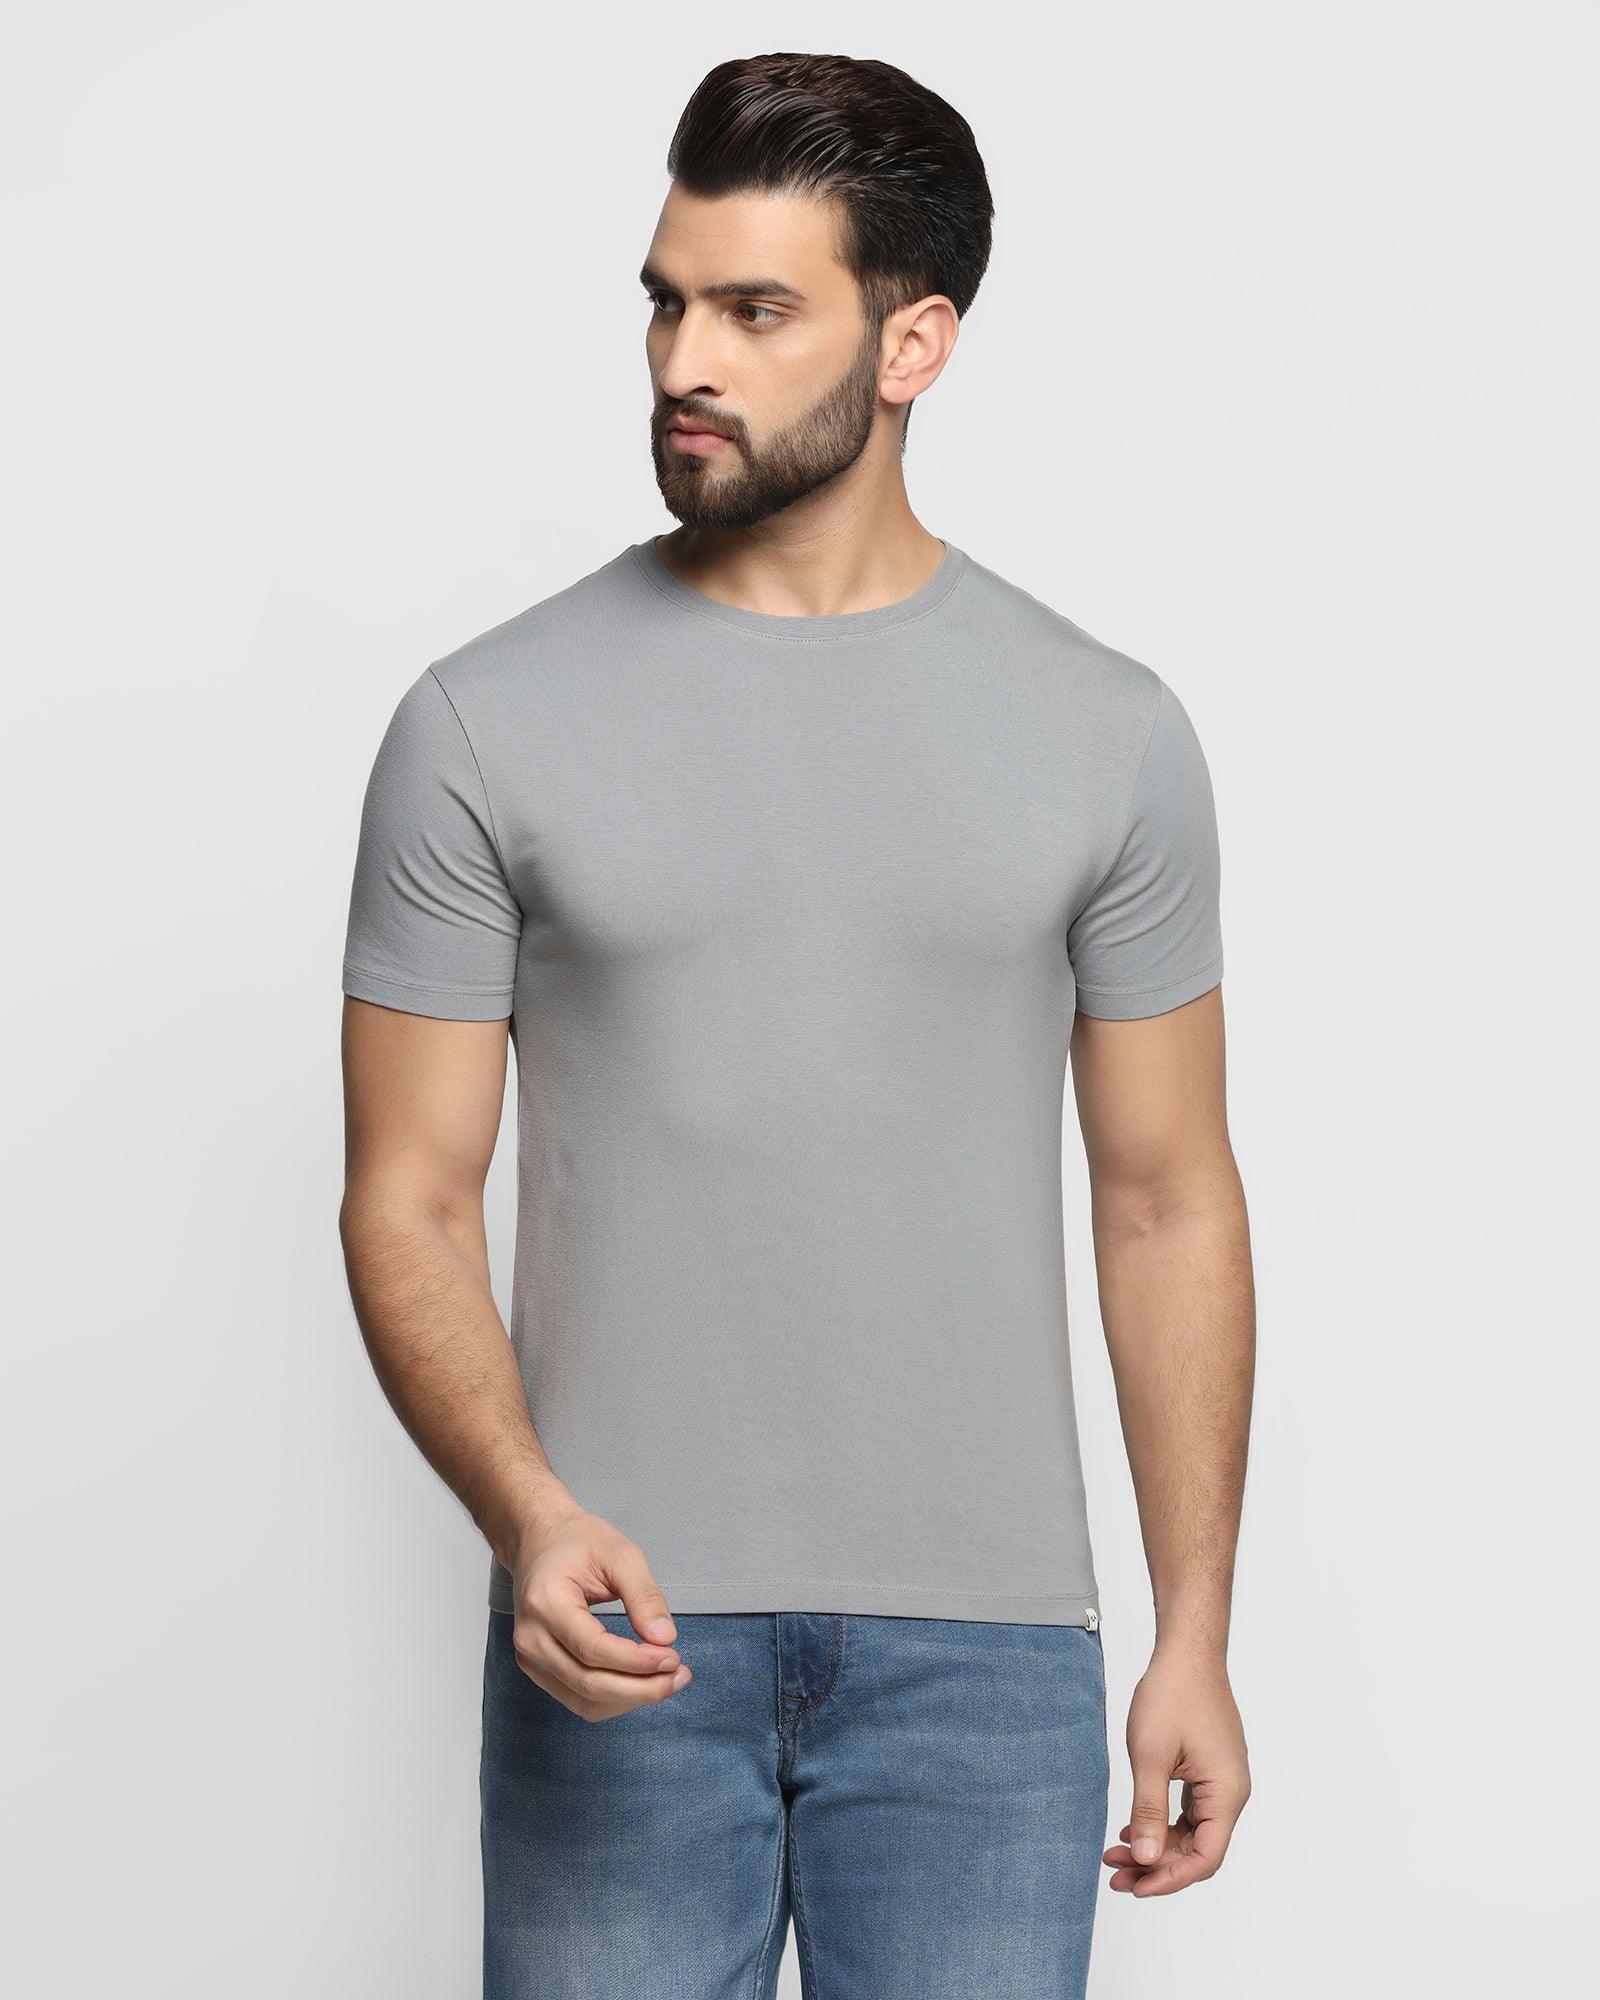 Crew Neck Ash Grey Solid T Shirt - Hola